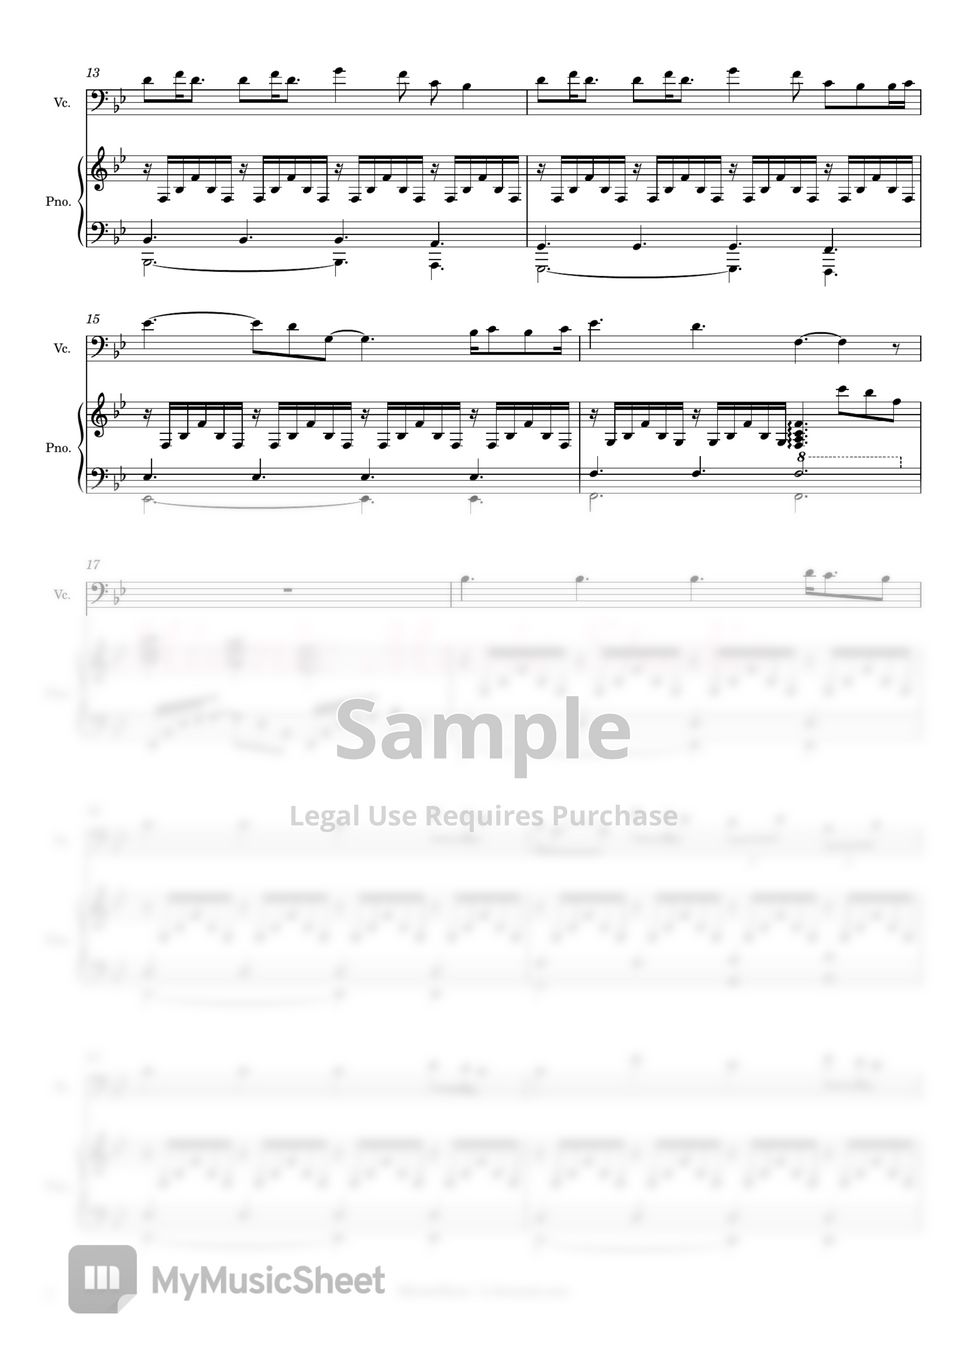 Christina Perri - A Thousand Years (破晓主题曲：千年之戀) 大提琴譜&鋼琴伴奏譜/Cello Sheets/Piano Sheets (cello, piano) by Miemie Music Studio